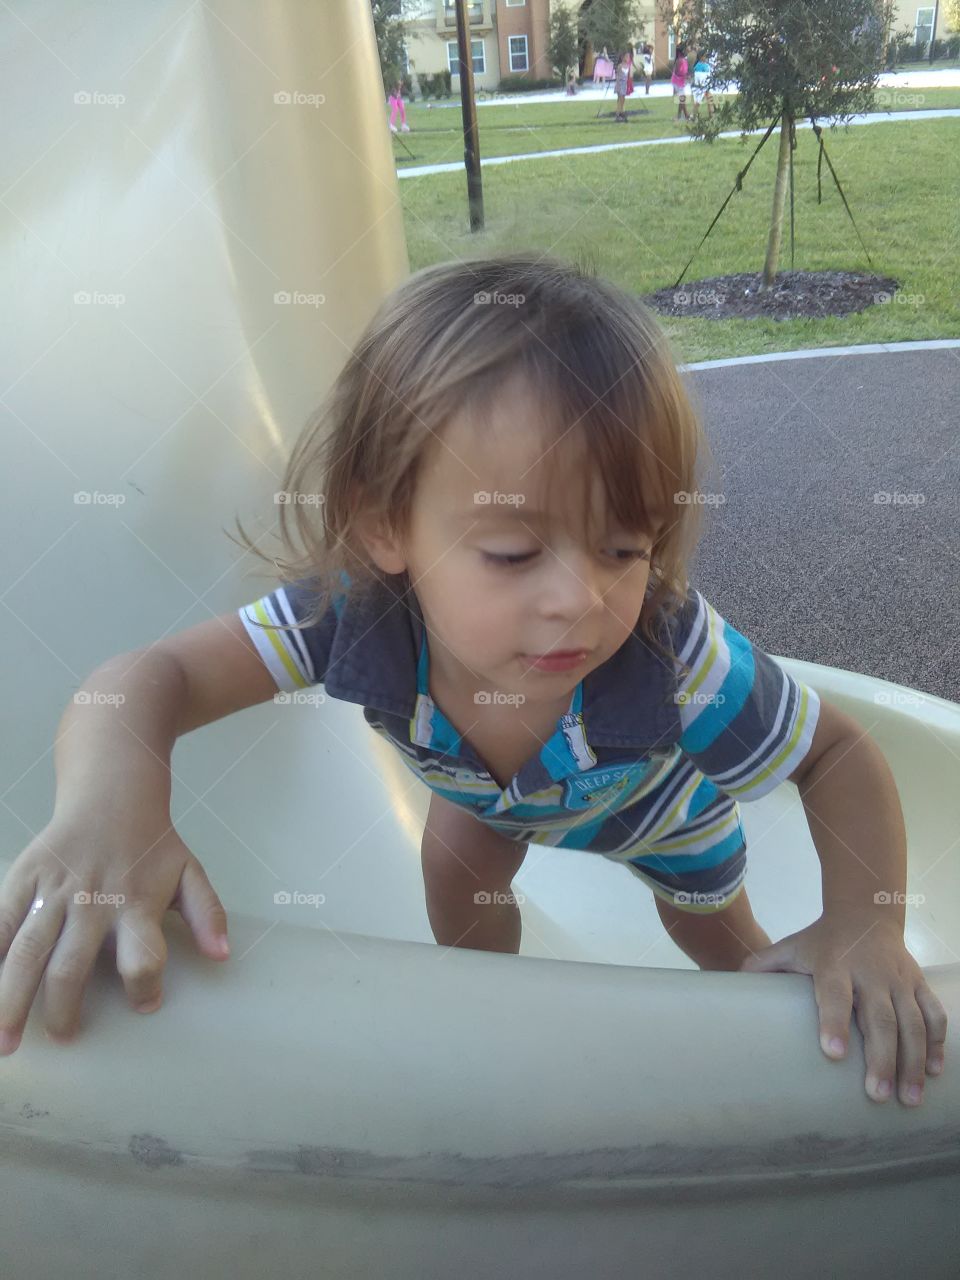 Climbing the slide